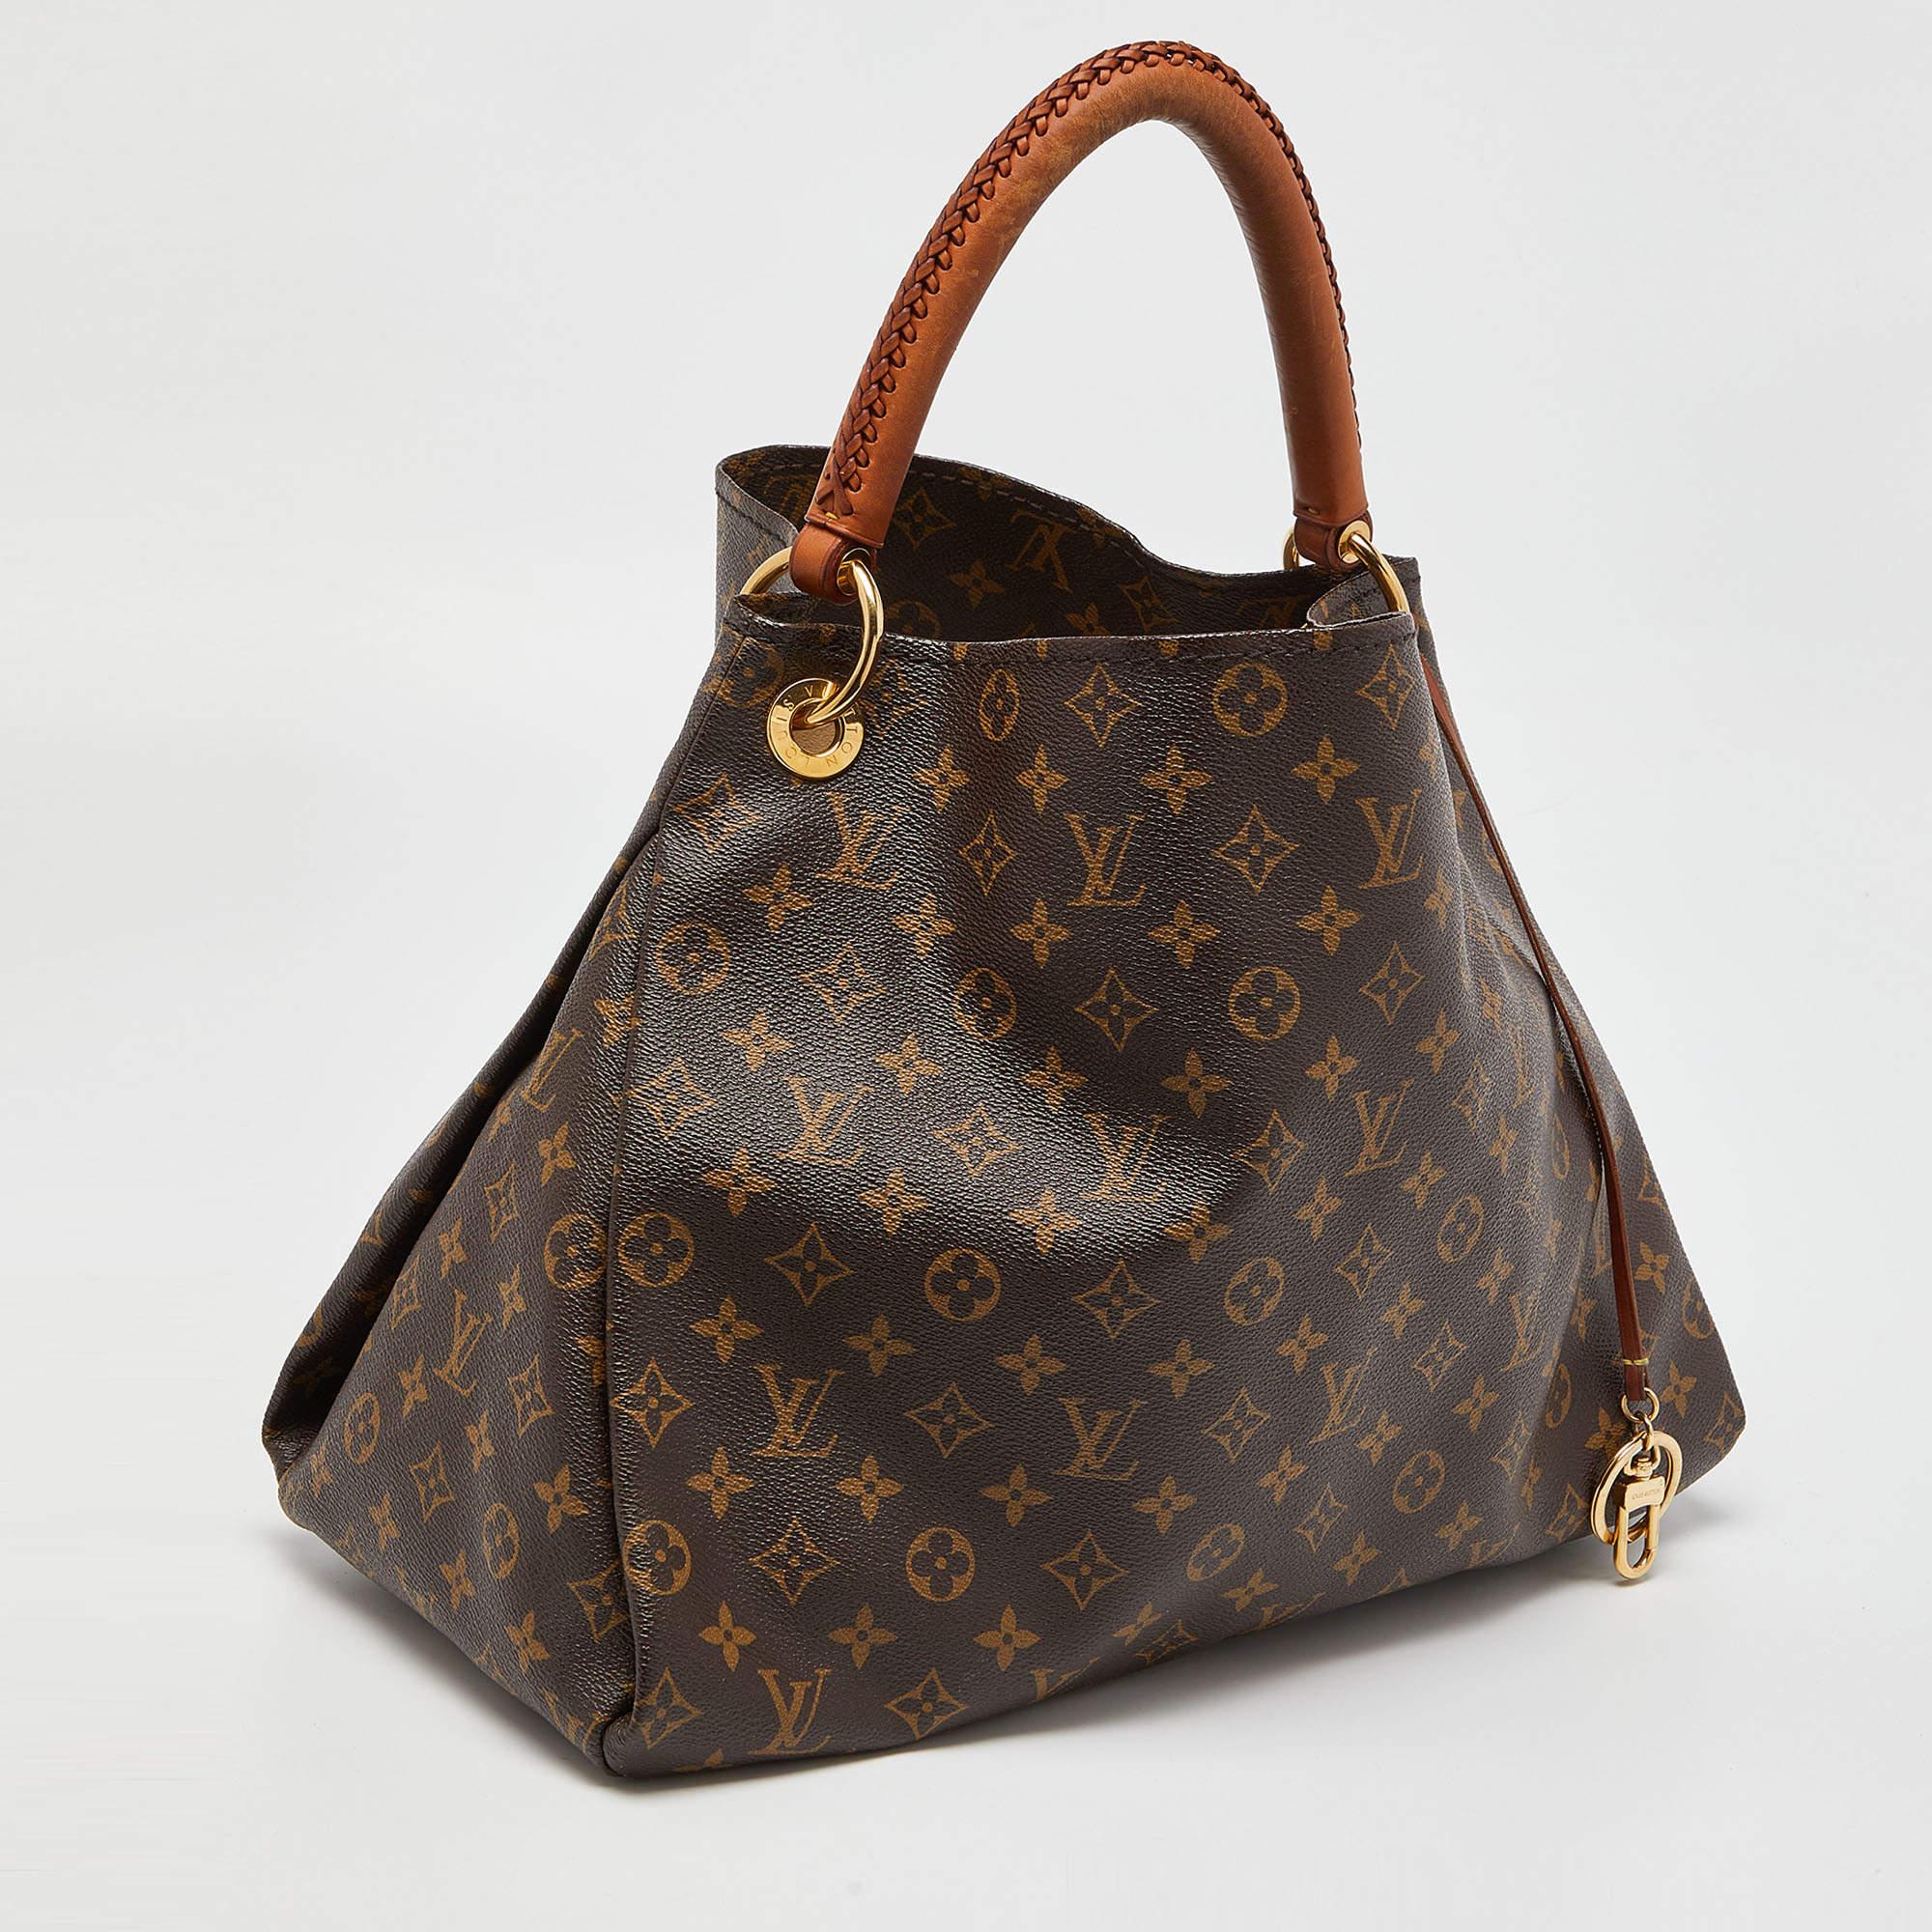 Louis Vuitton Monogram Canvas Artsy MM Bag In Fair Condition For Sale In Dubai, Al Qouz 2